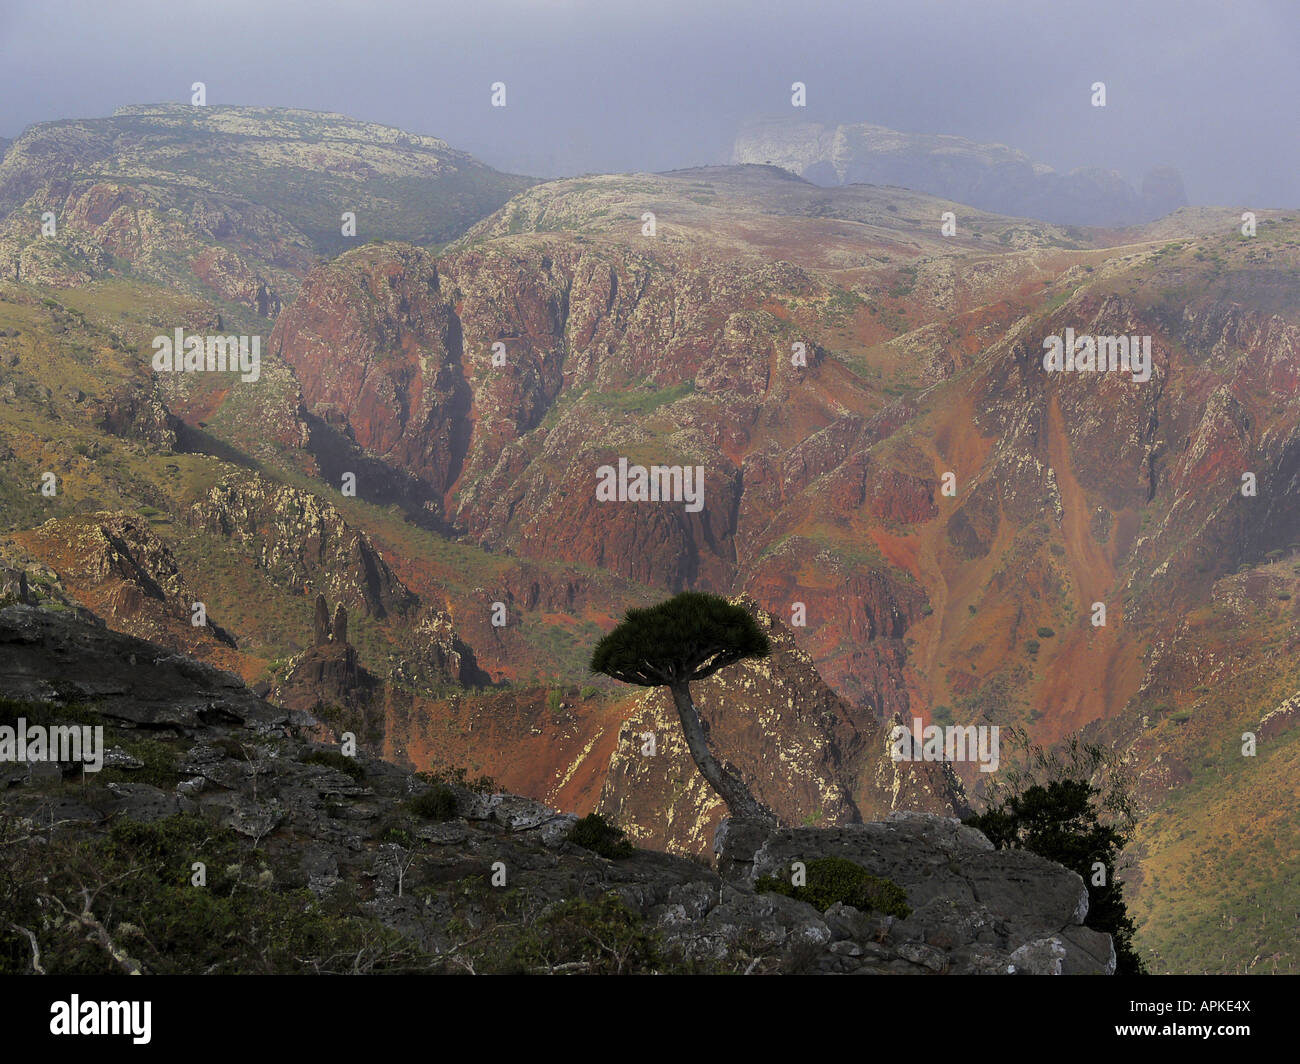 dragon tree (Dracaena cinnabari), single tree in front of mountain panorama, Yemen, Socotra Stock Photo